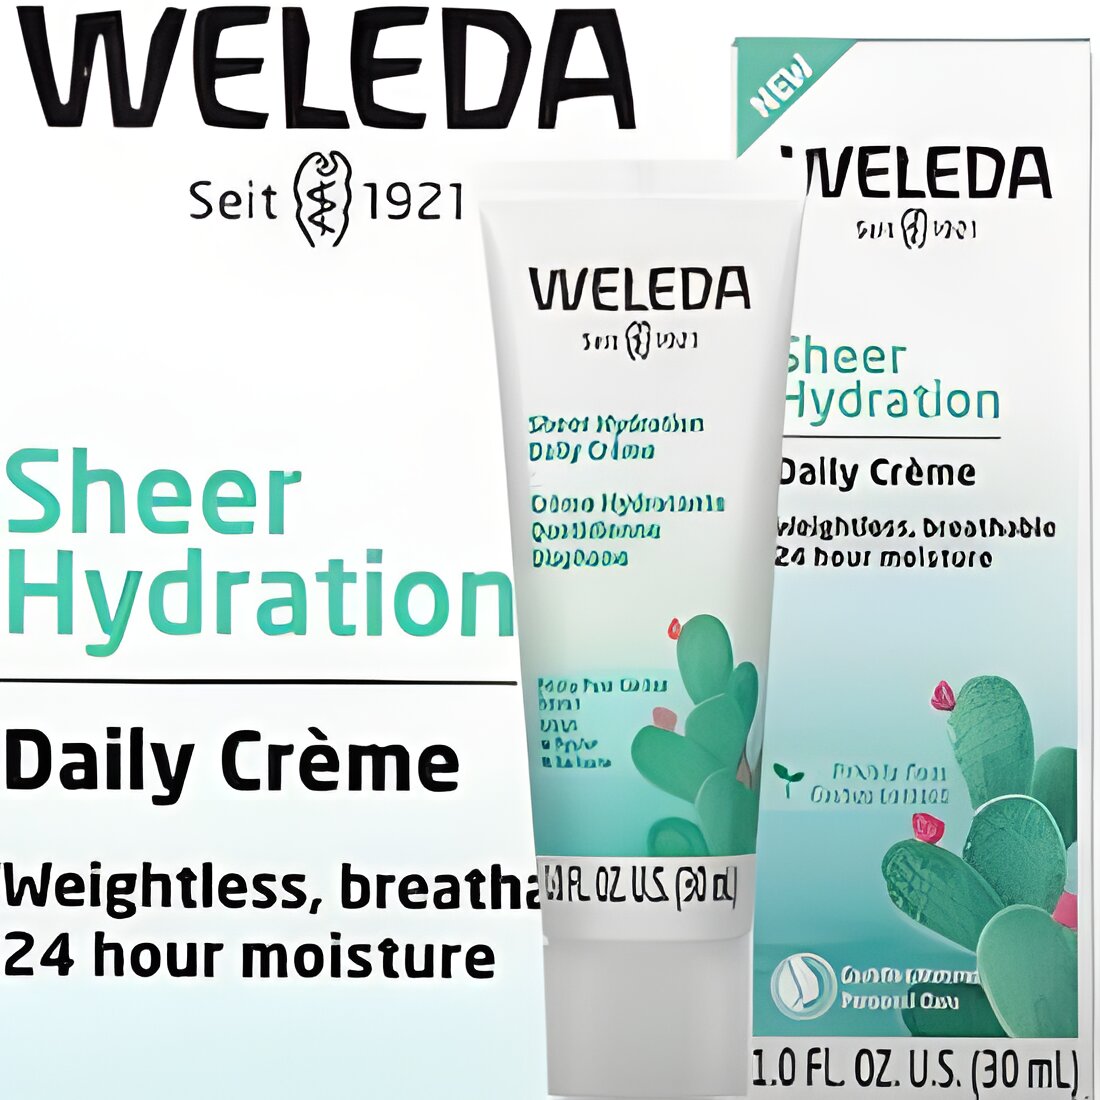 Free Weleda Sheer Hydration Daily Crème